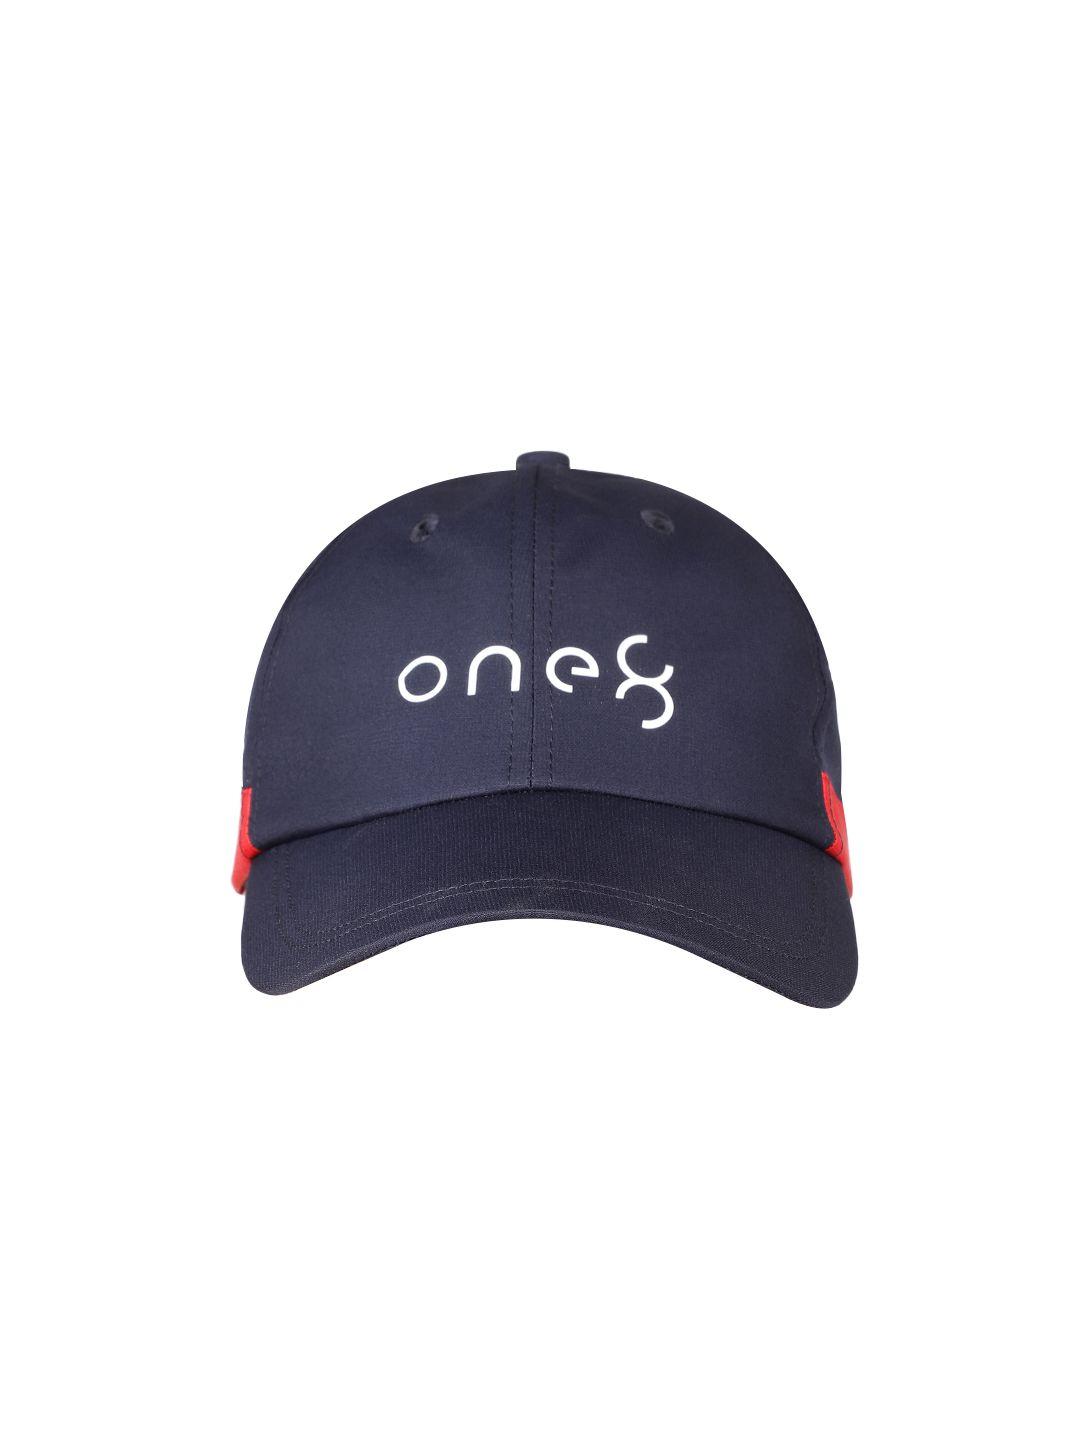 one8 x puma unisex core baseball cap